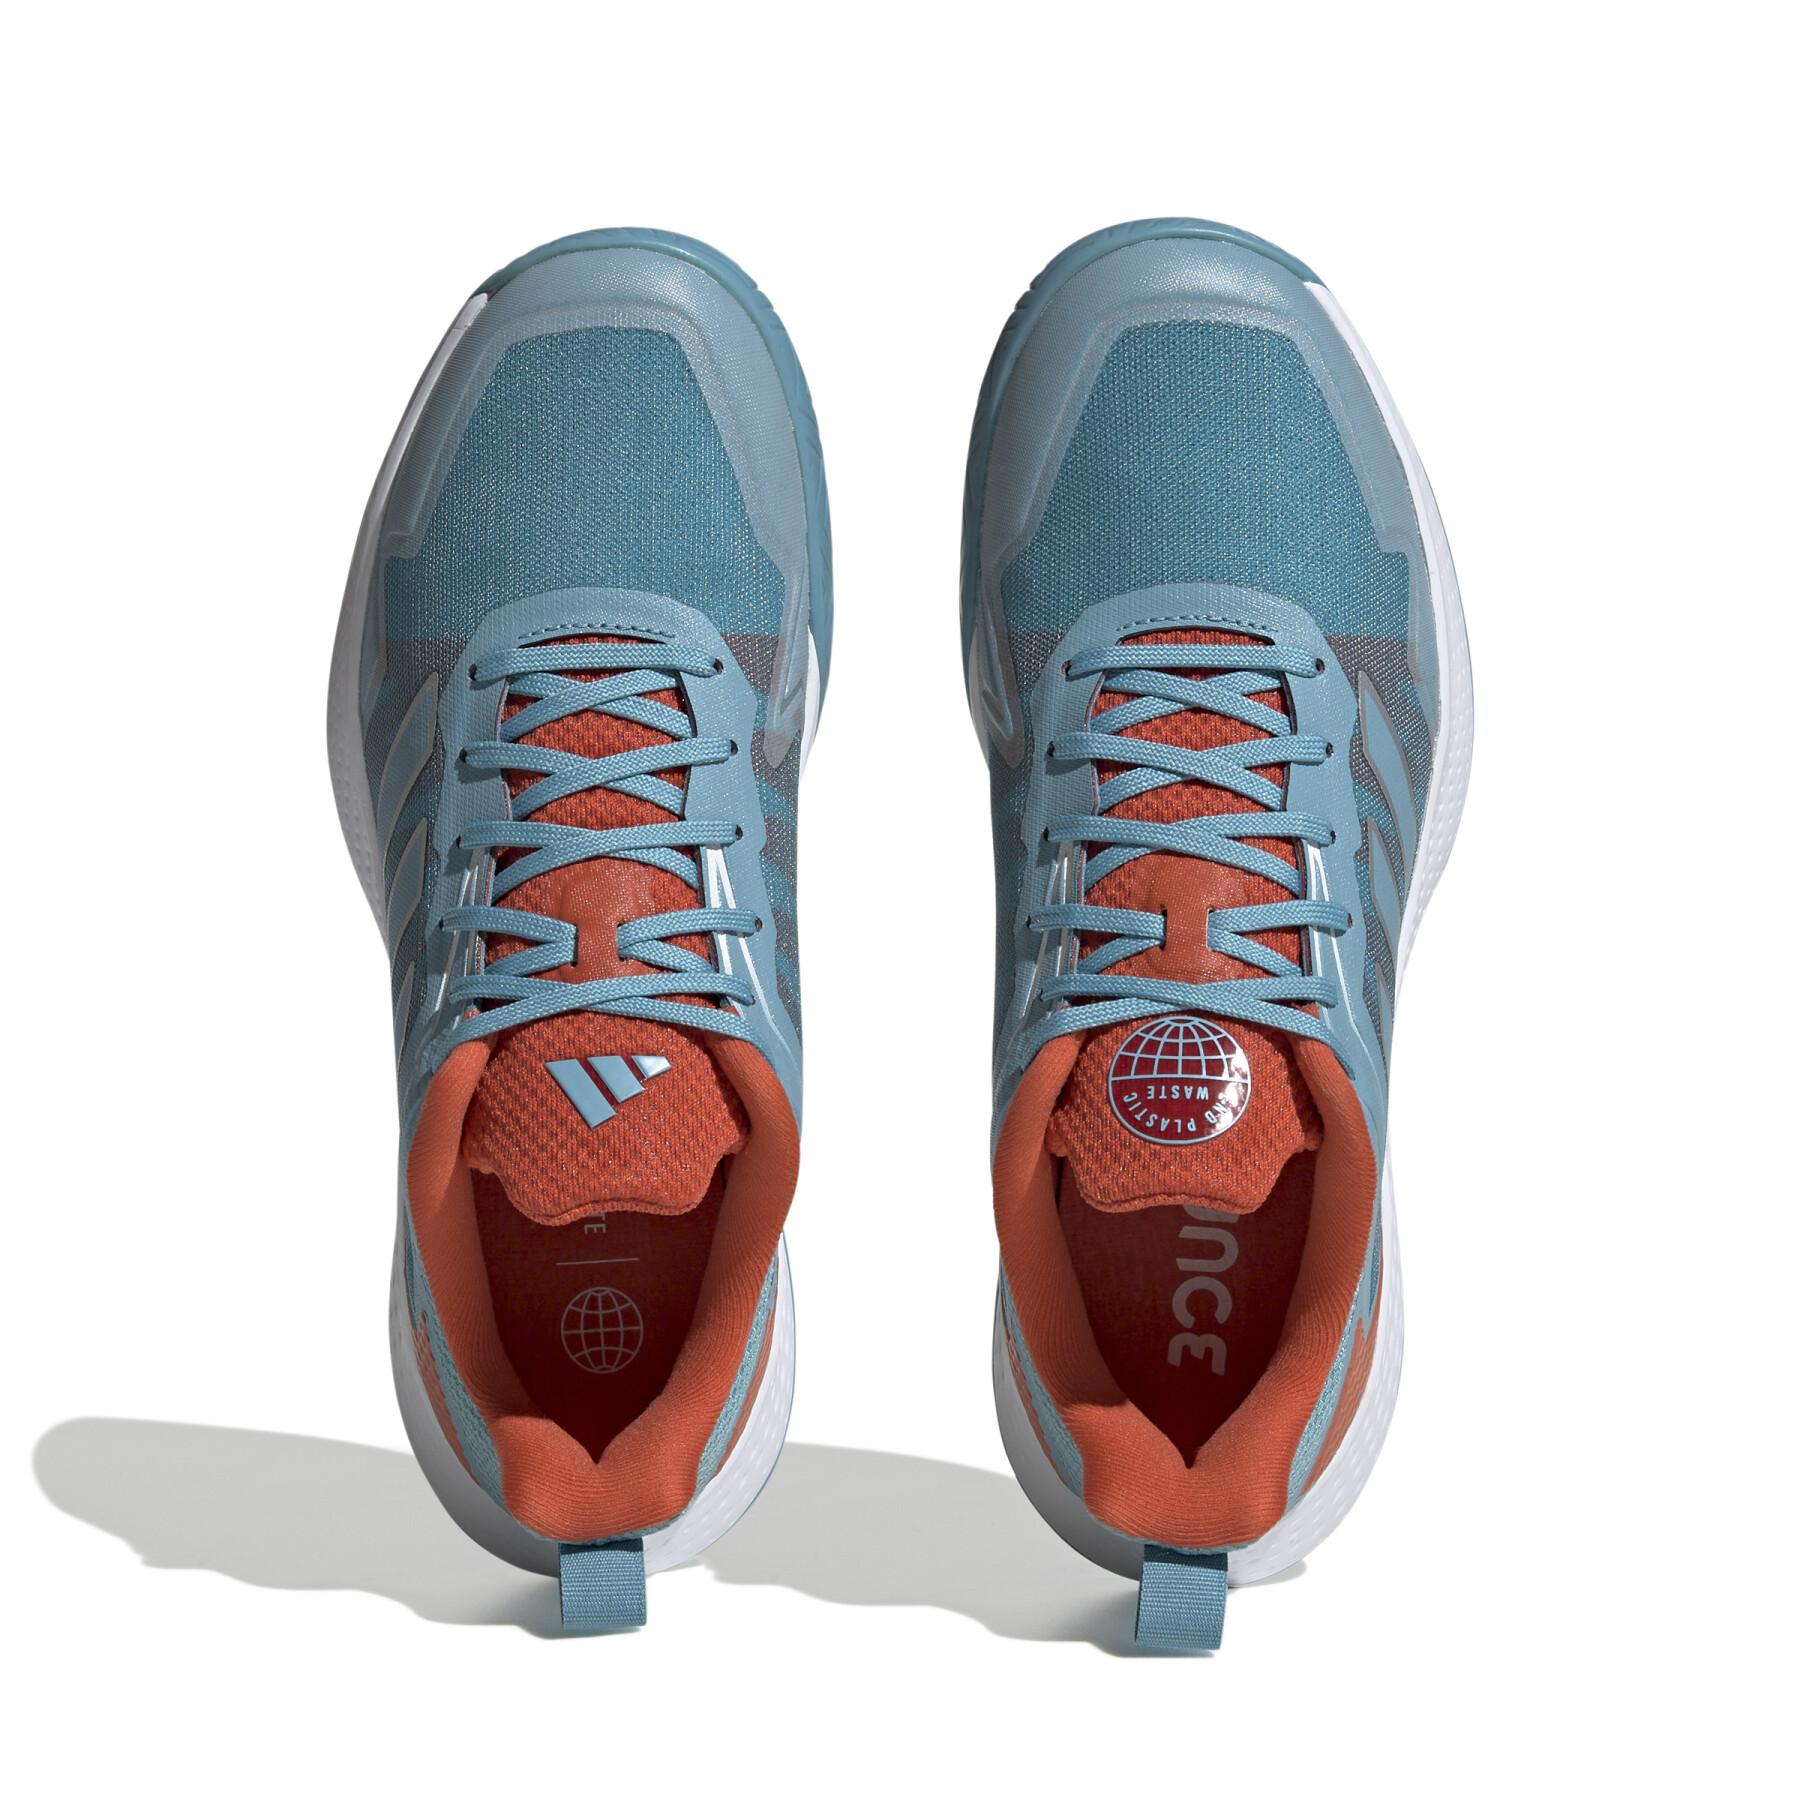 Women's tennis shoes adidas Defiant Speed